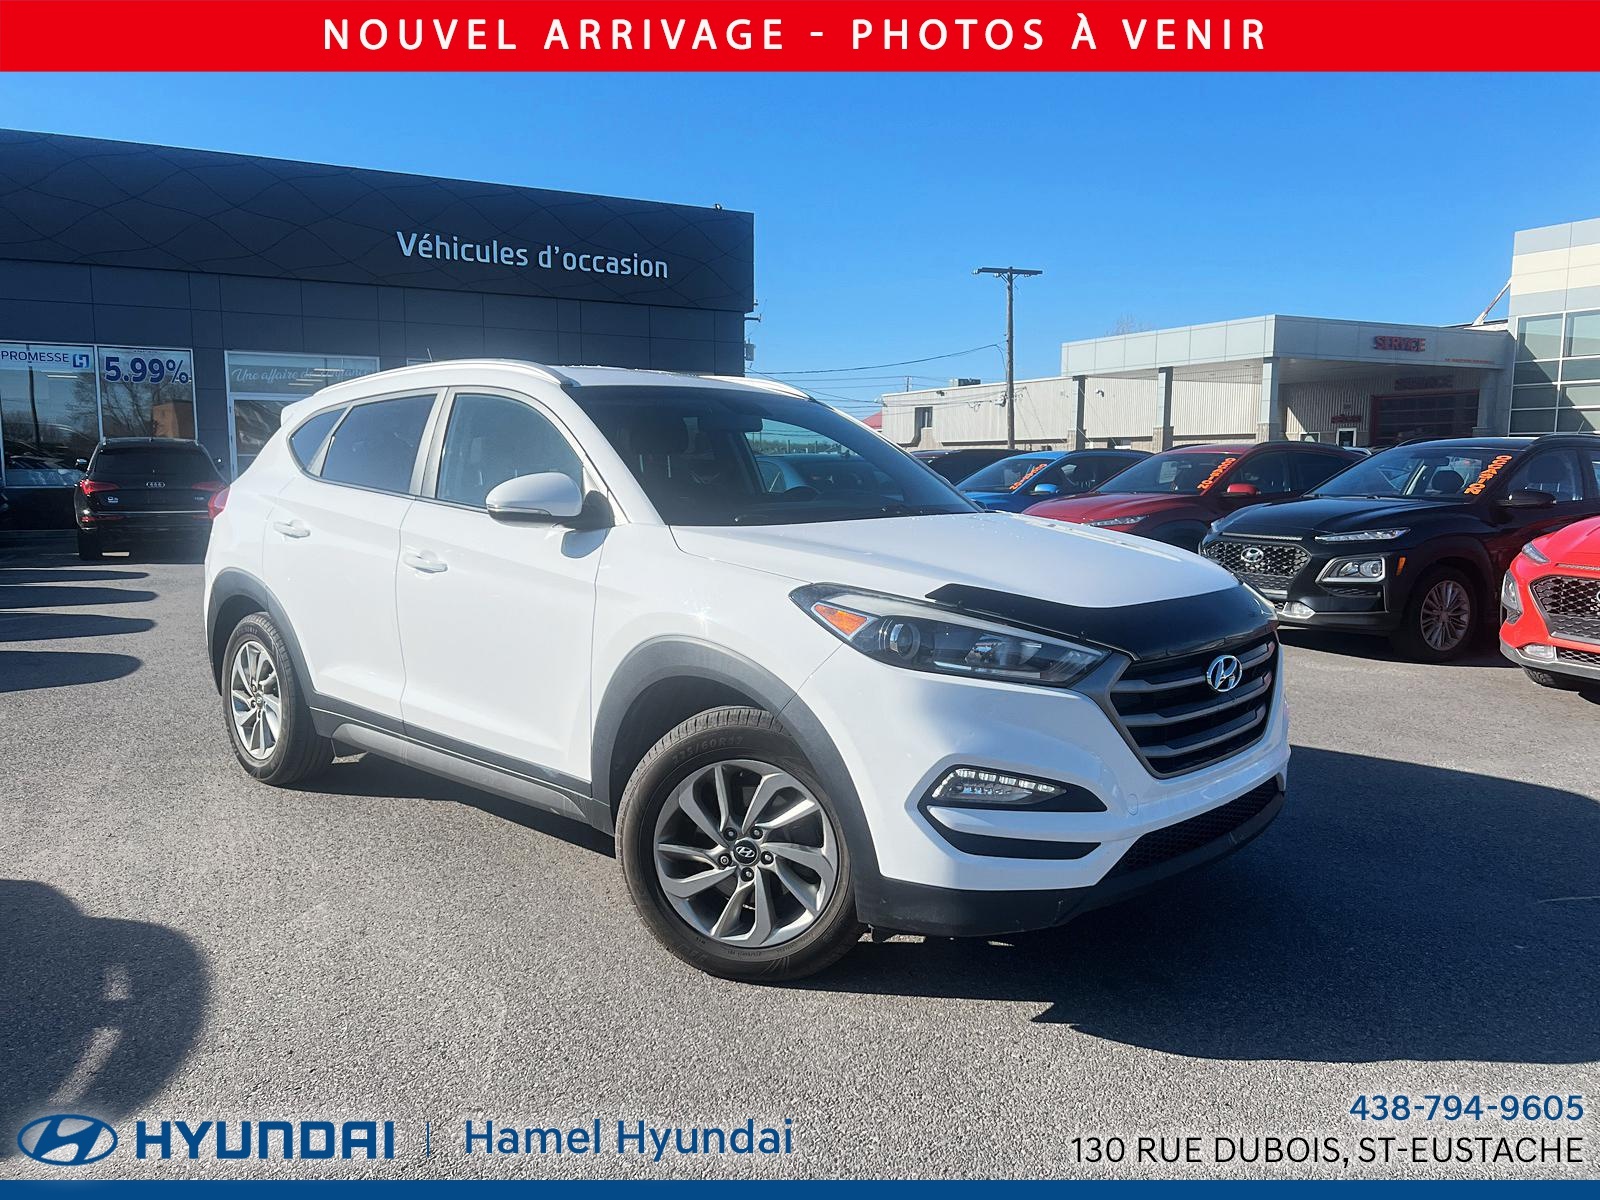 2016 Hyundai Tucson 2.0L FWD